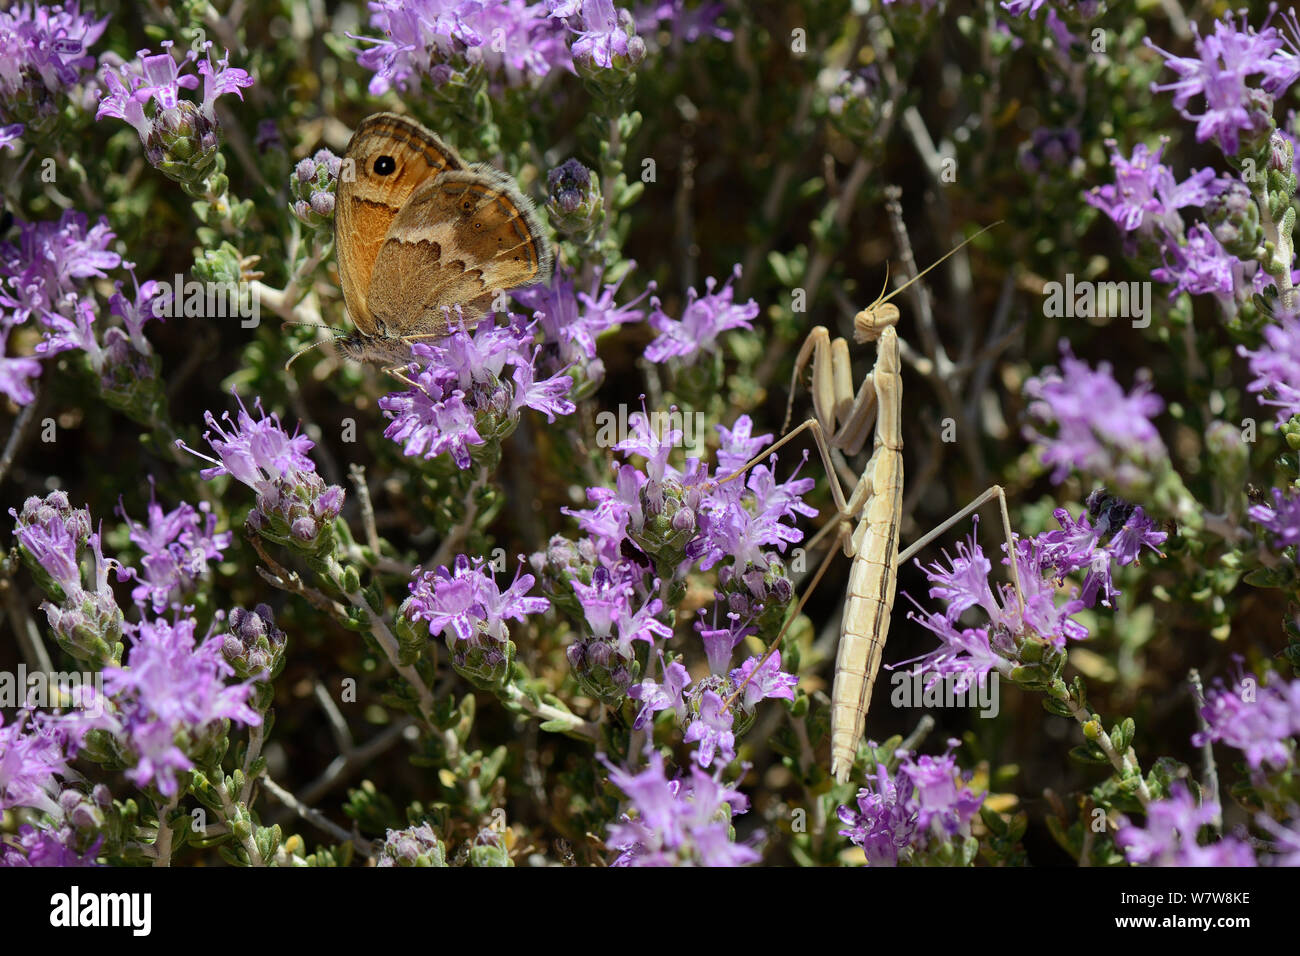 Mantis ninfa (mantis religiosa) la caza una mariposa (Small Heath cretense Coenonympha thyrsis) como se alimenta de encabezados de tomillo silvestre / flores de tomillo (Thymus capitatus), Creta, Grecia, en mayo. Foto de stock